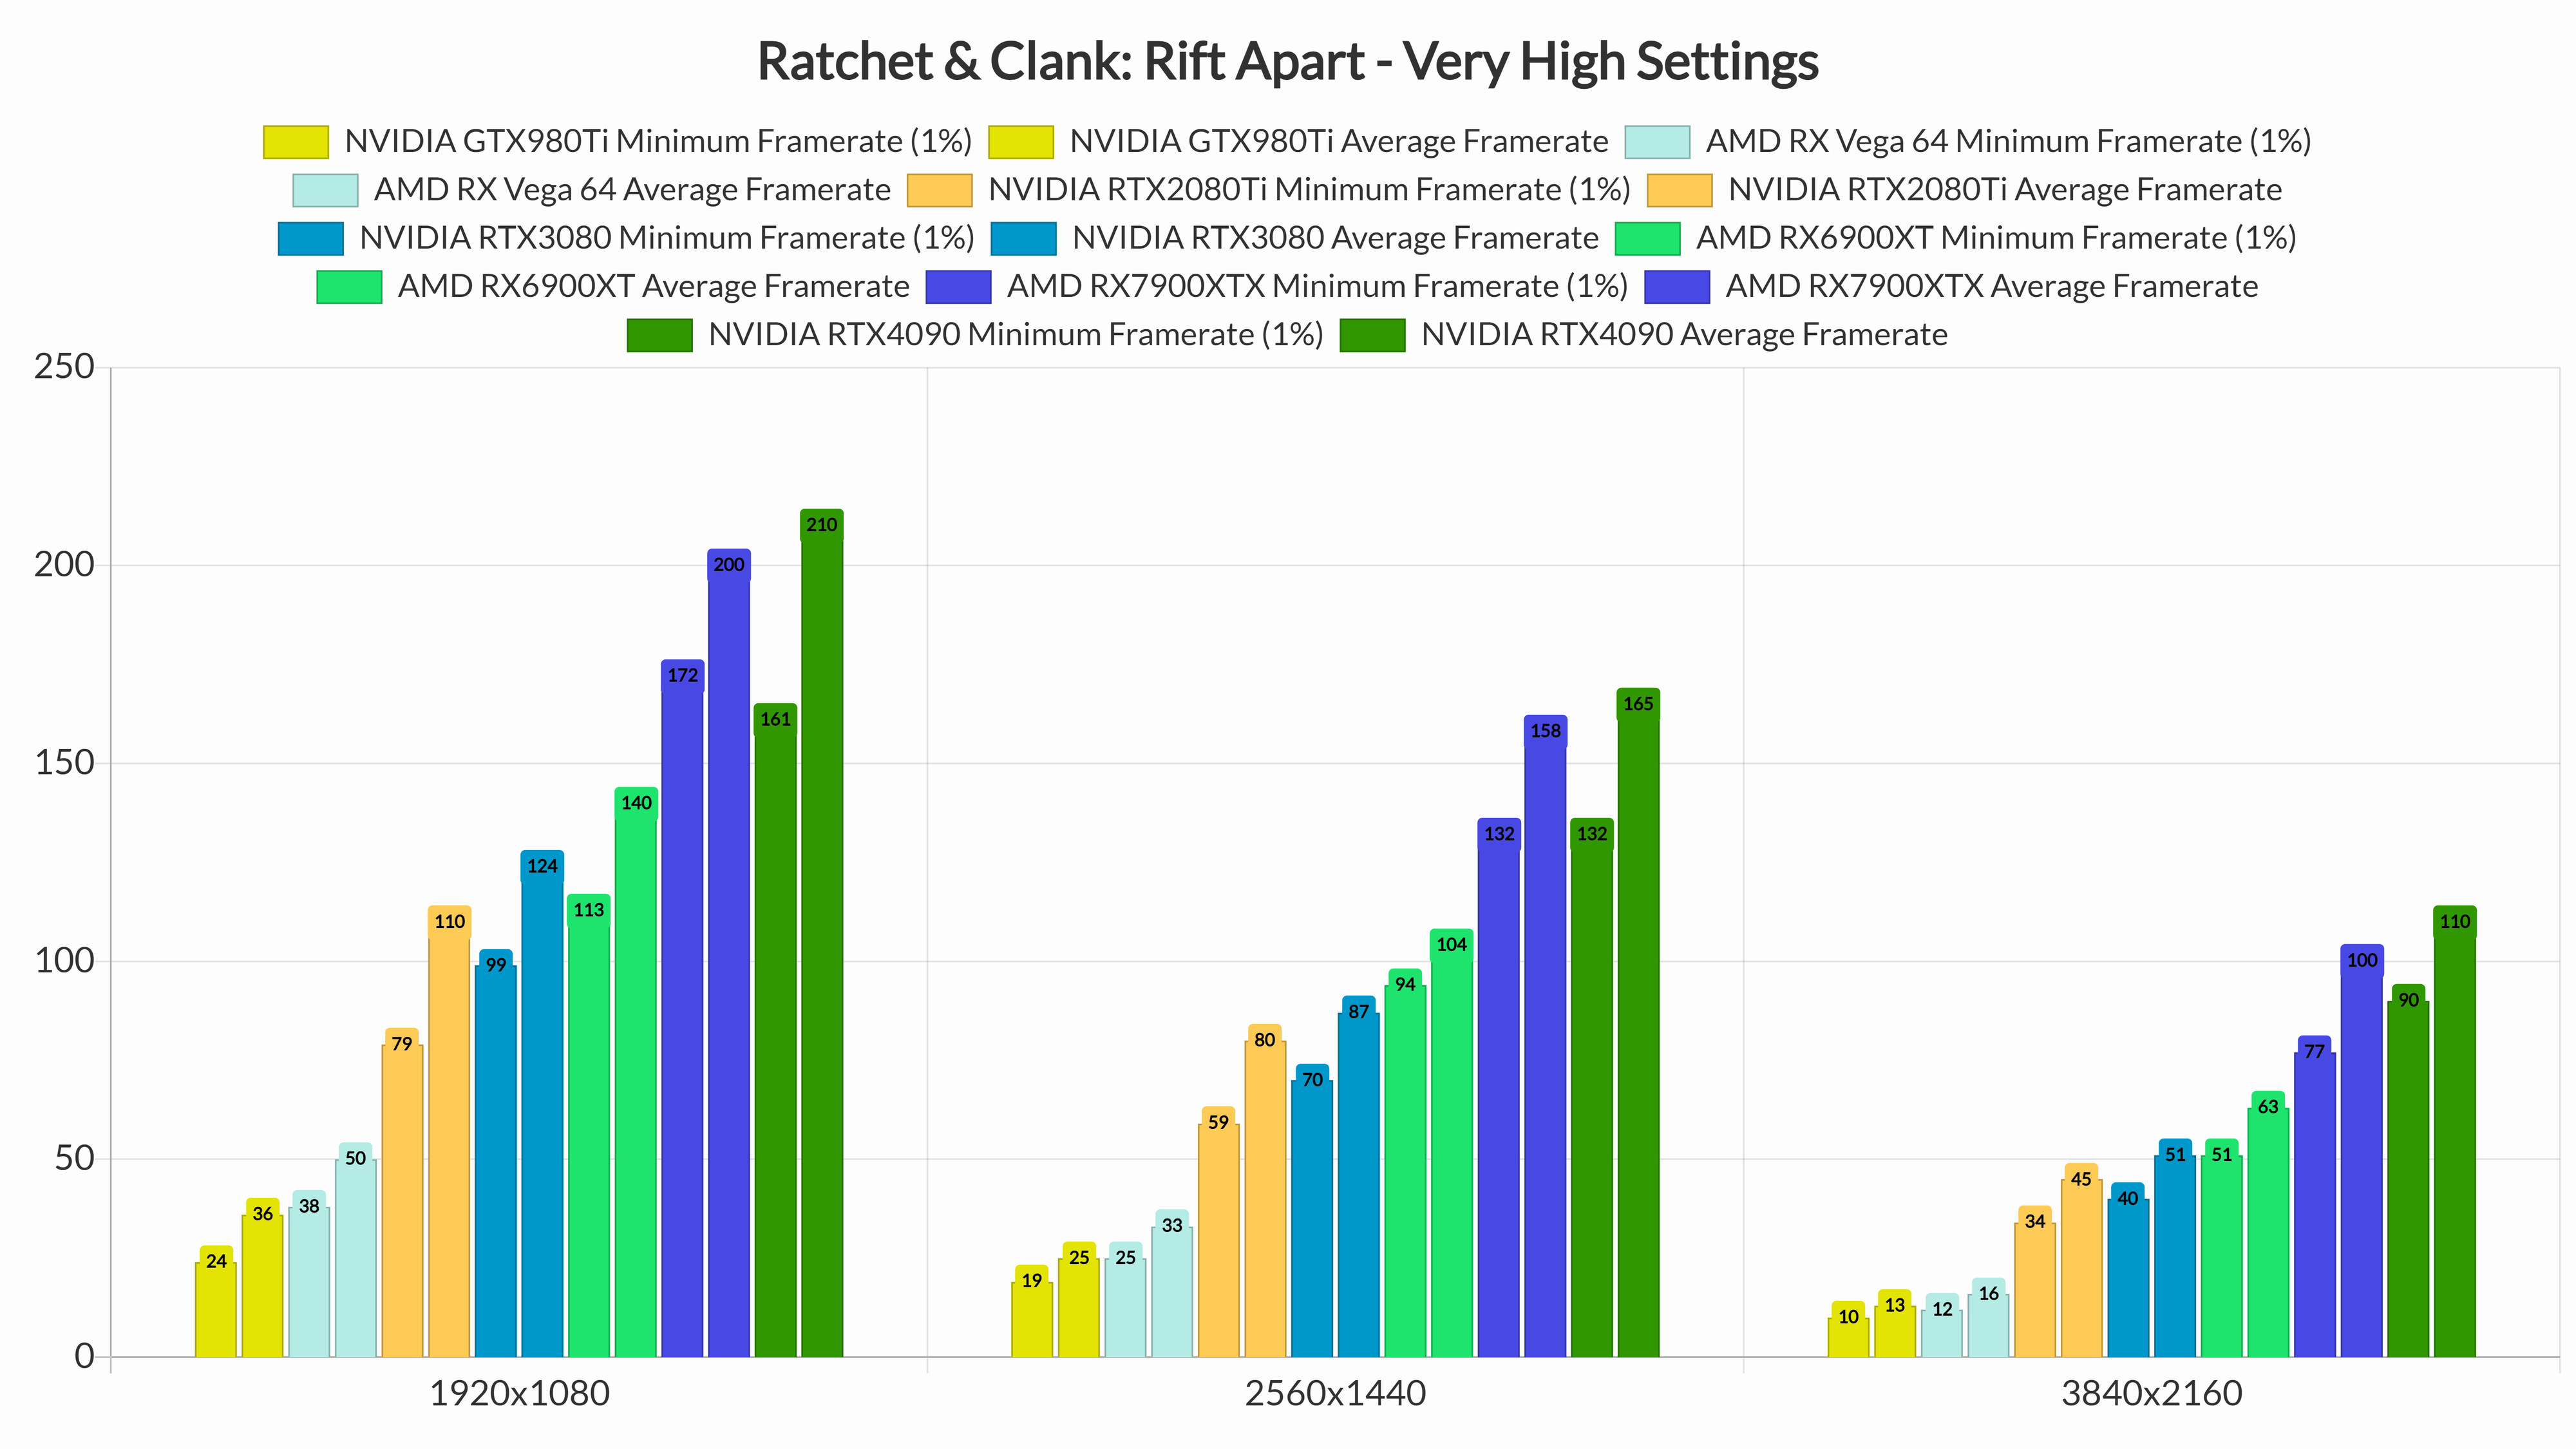 Ratchet & Clank Rift Apart Benchmark Test & Performance Analysis